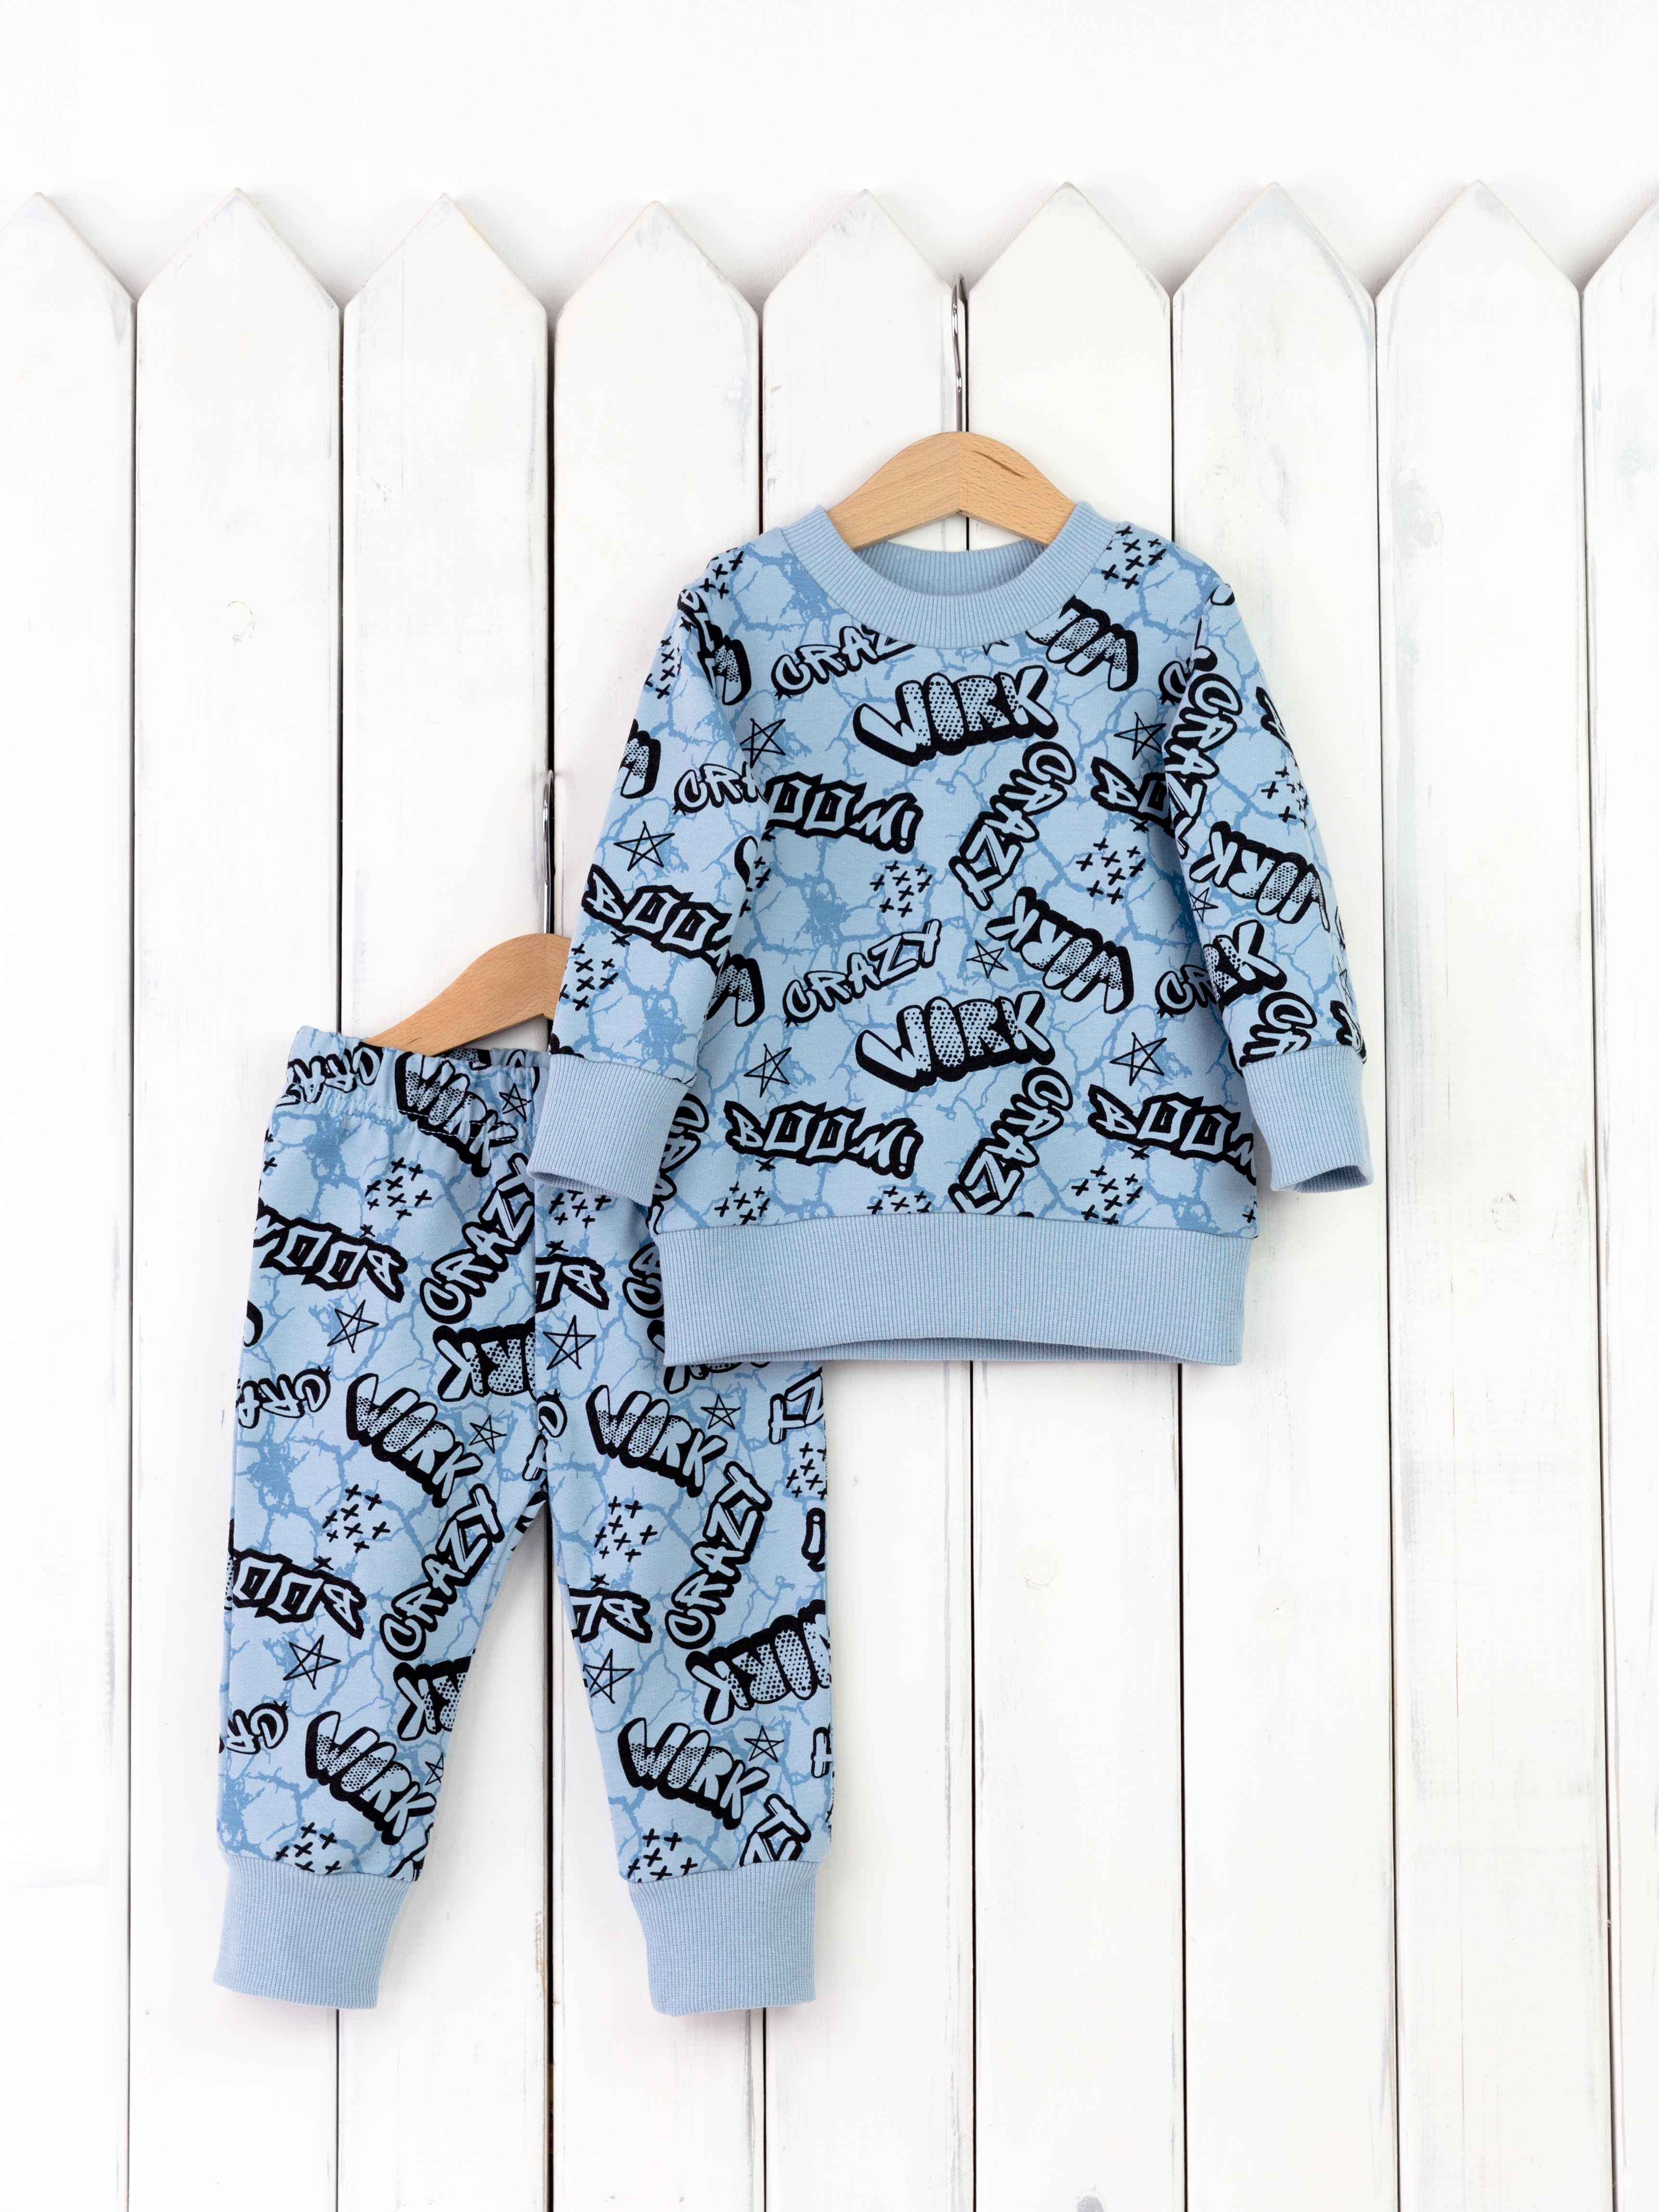 КД402/6-Ф Комплект детский р.86 джемпер+брюки/надписи на голубом Бэби Бум